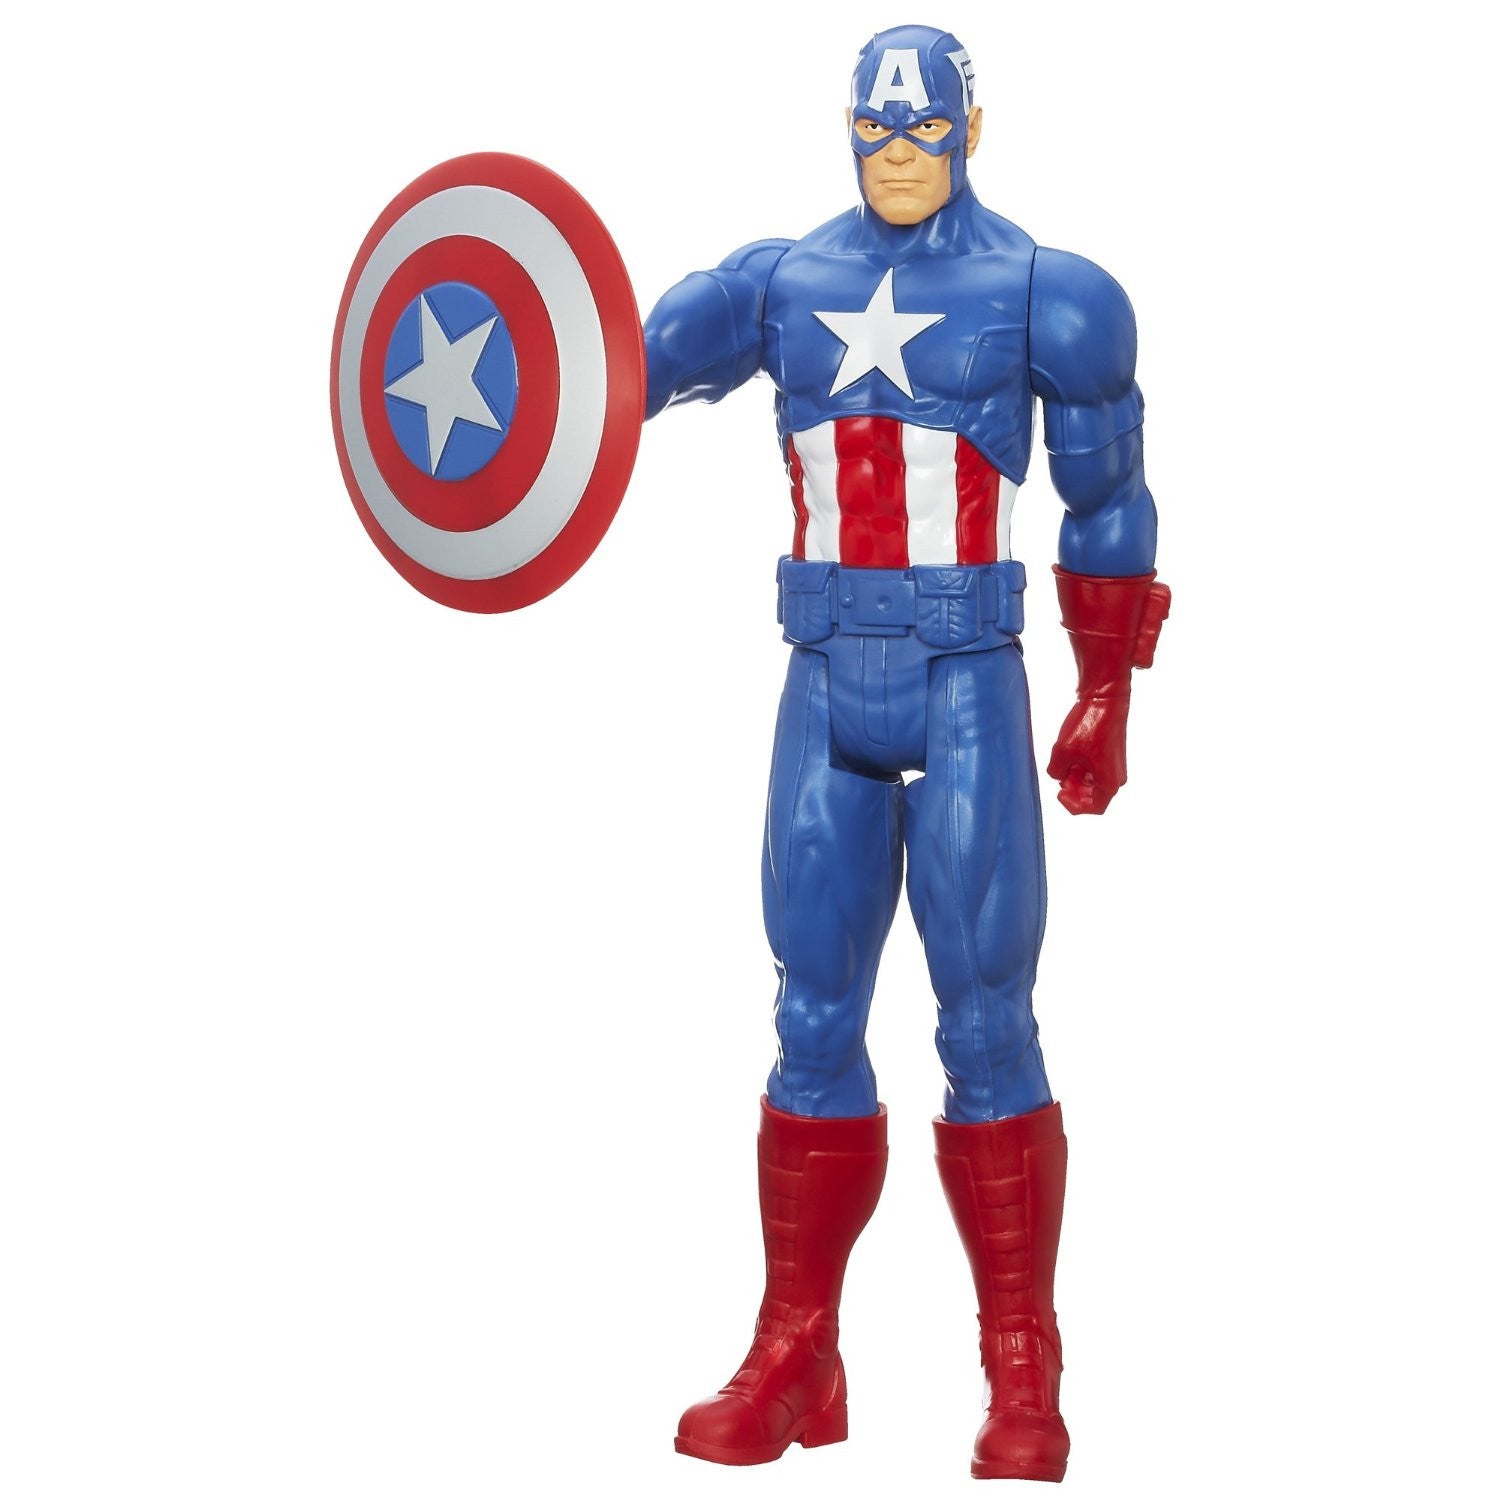 Marvel Avengers Assemble Titan Hero Series Captain America Figure, 12-Inch